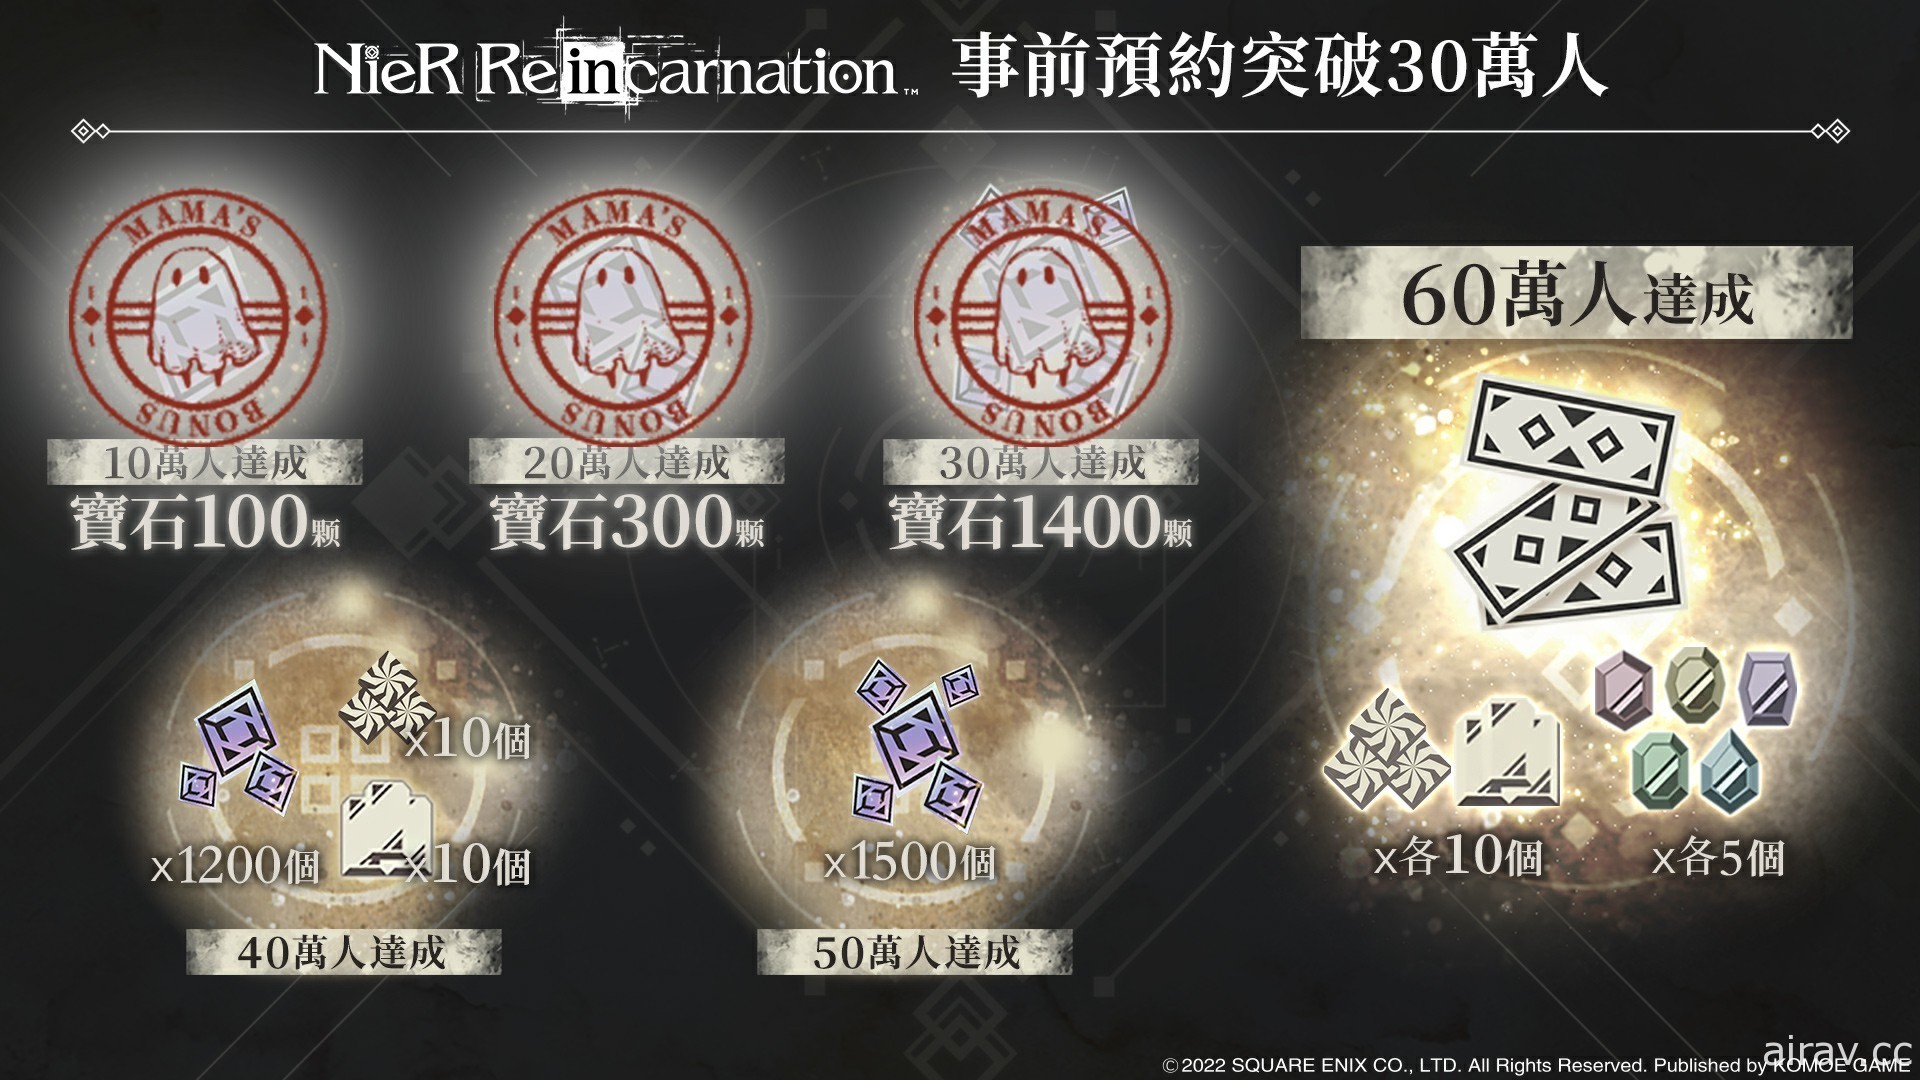 《NieR Re [in] carnation》繁中版事前預約突破 30 萬 釋出角色實機戰鬥 PV